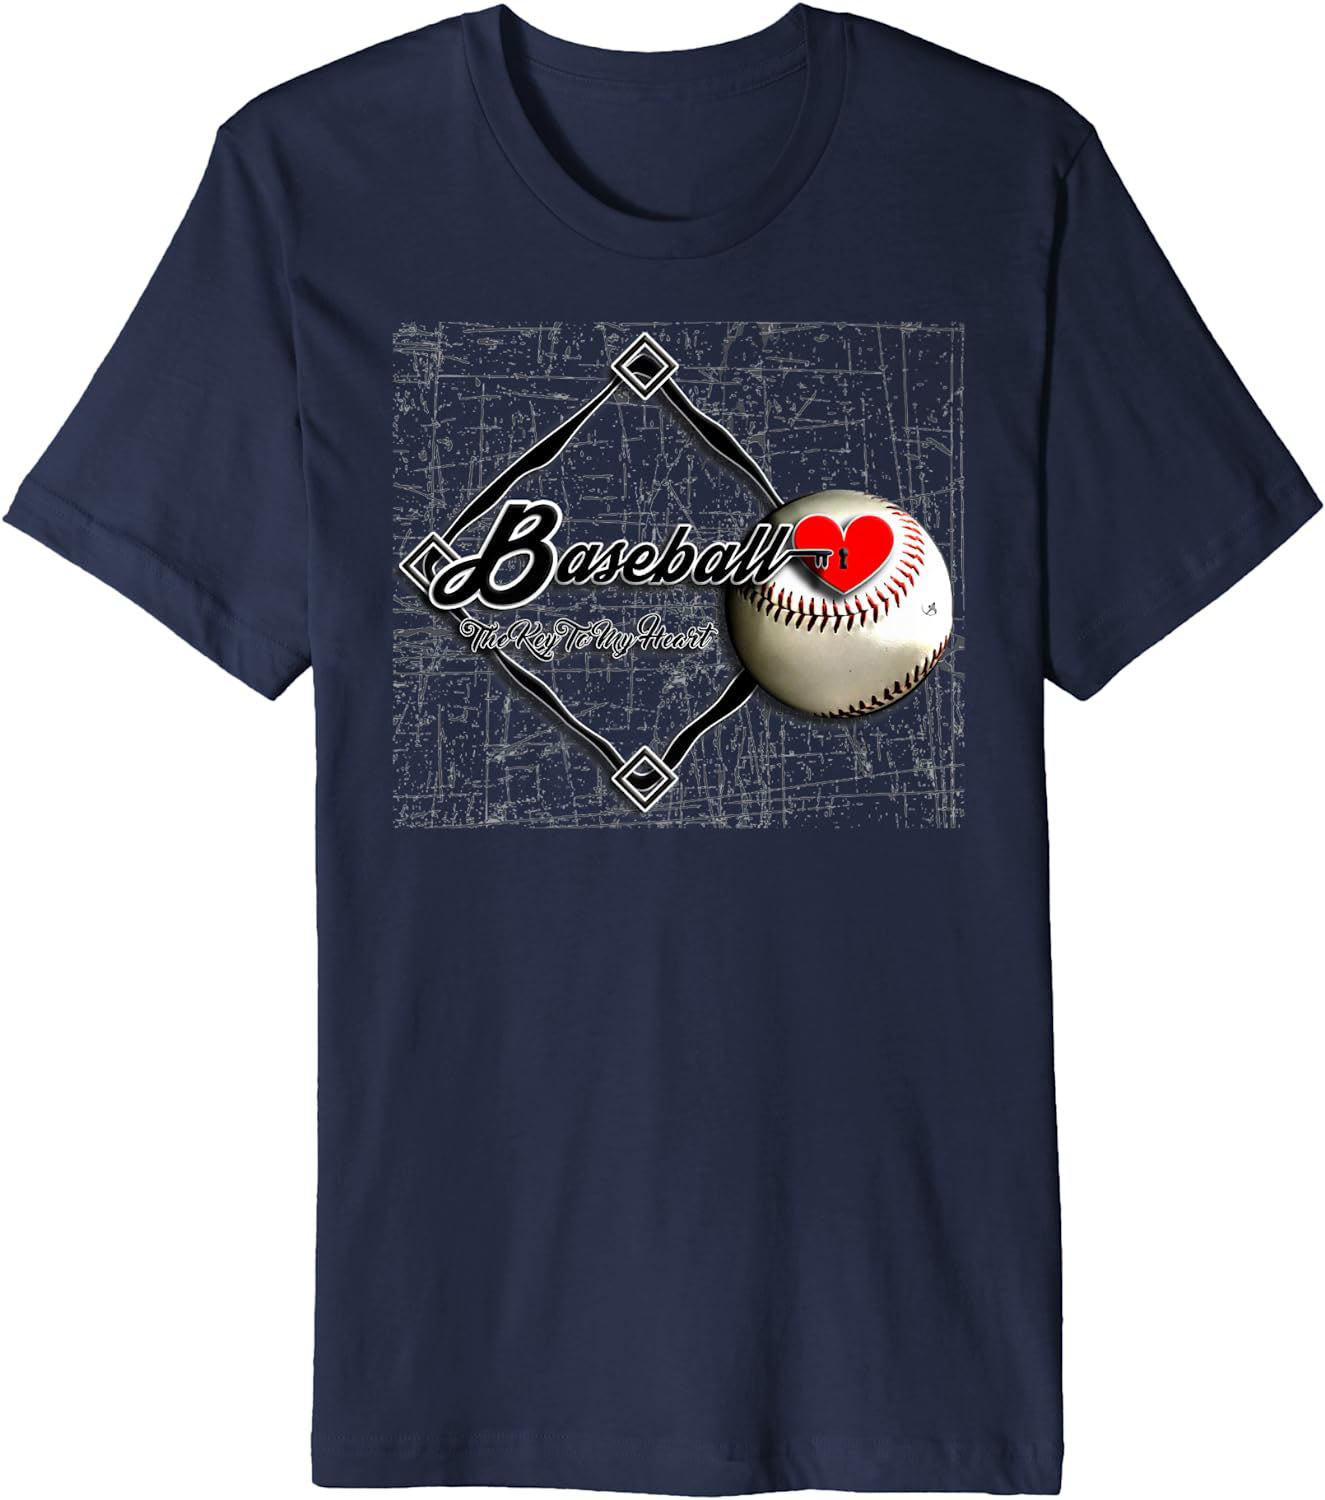 Baseball The Key To My Heart - Premium T-Shirt